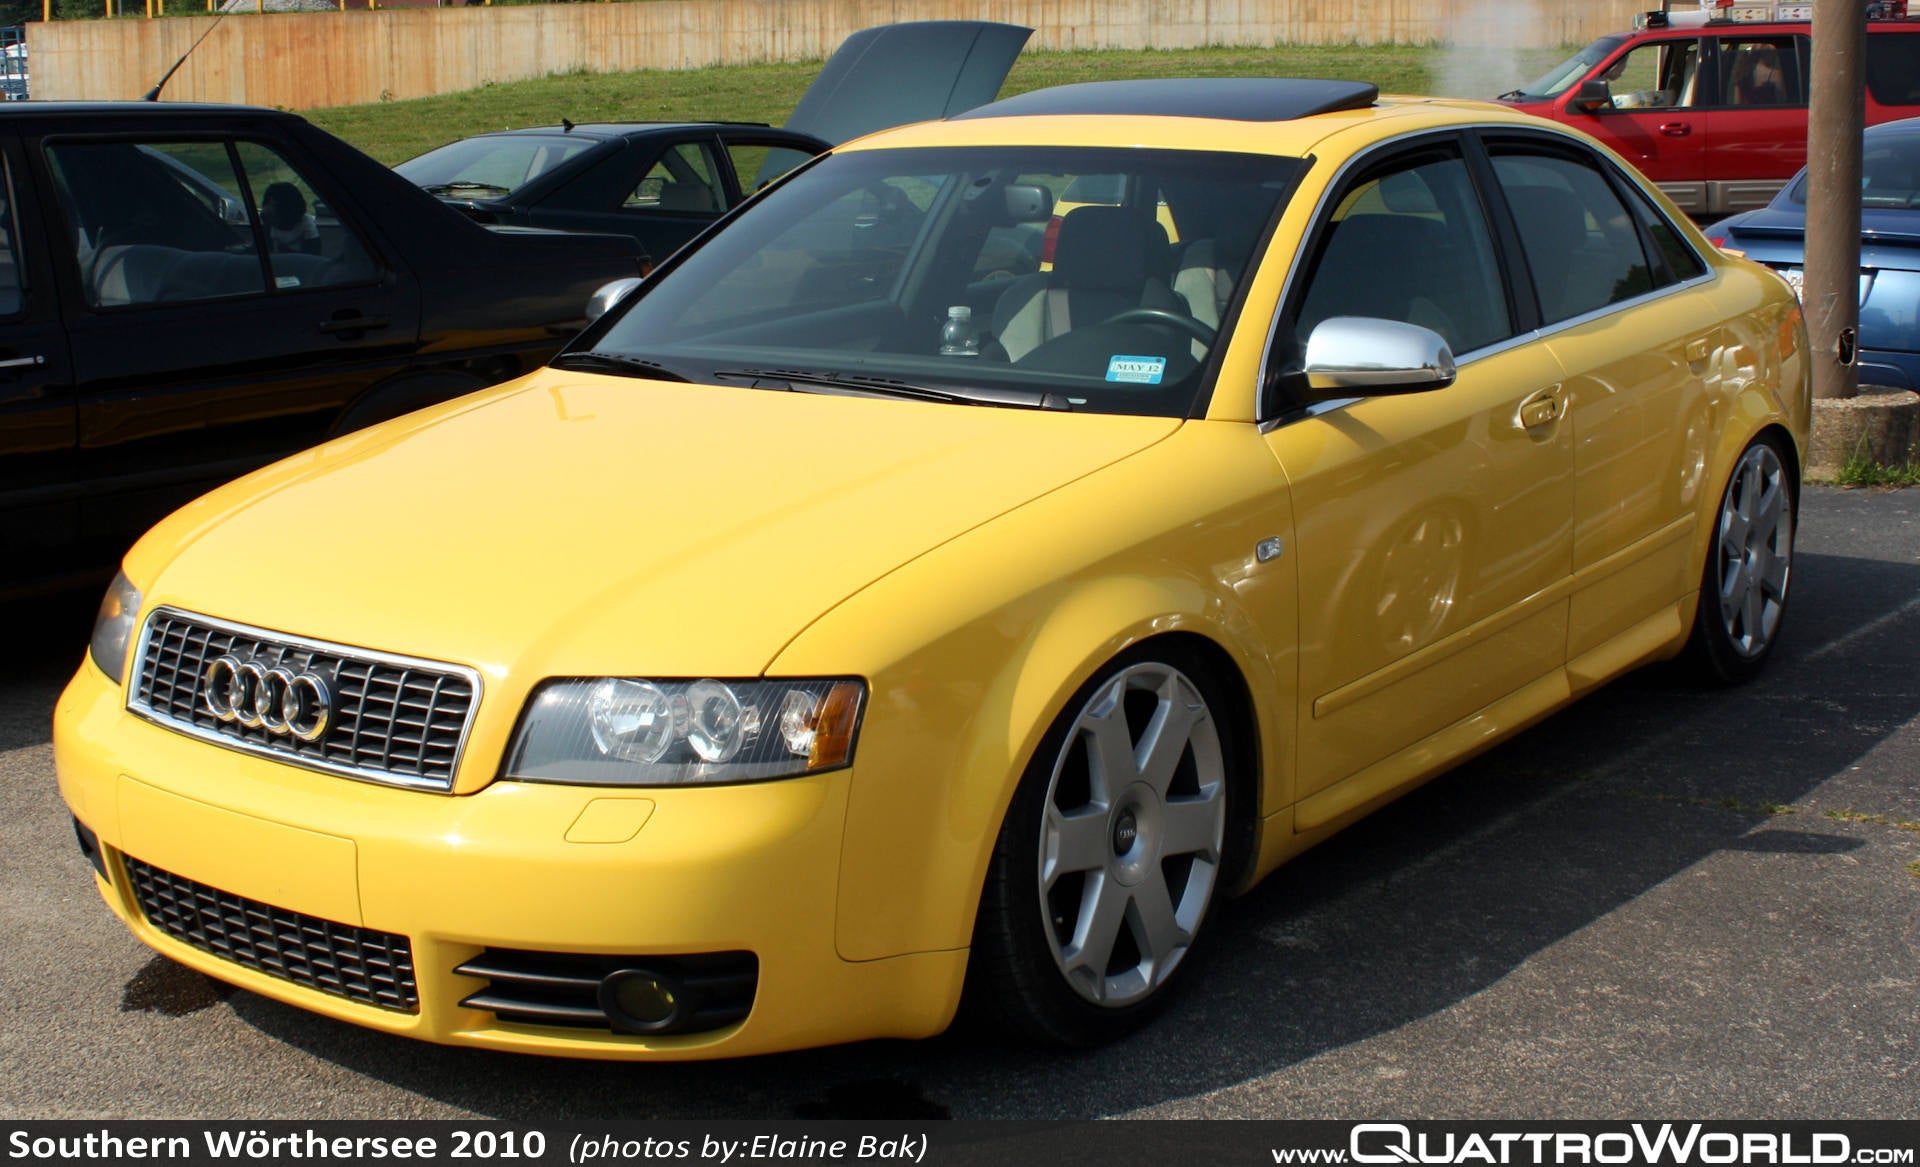 Audi-S4-yellow.jpg